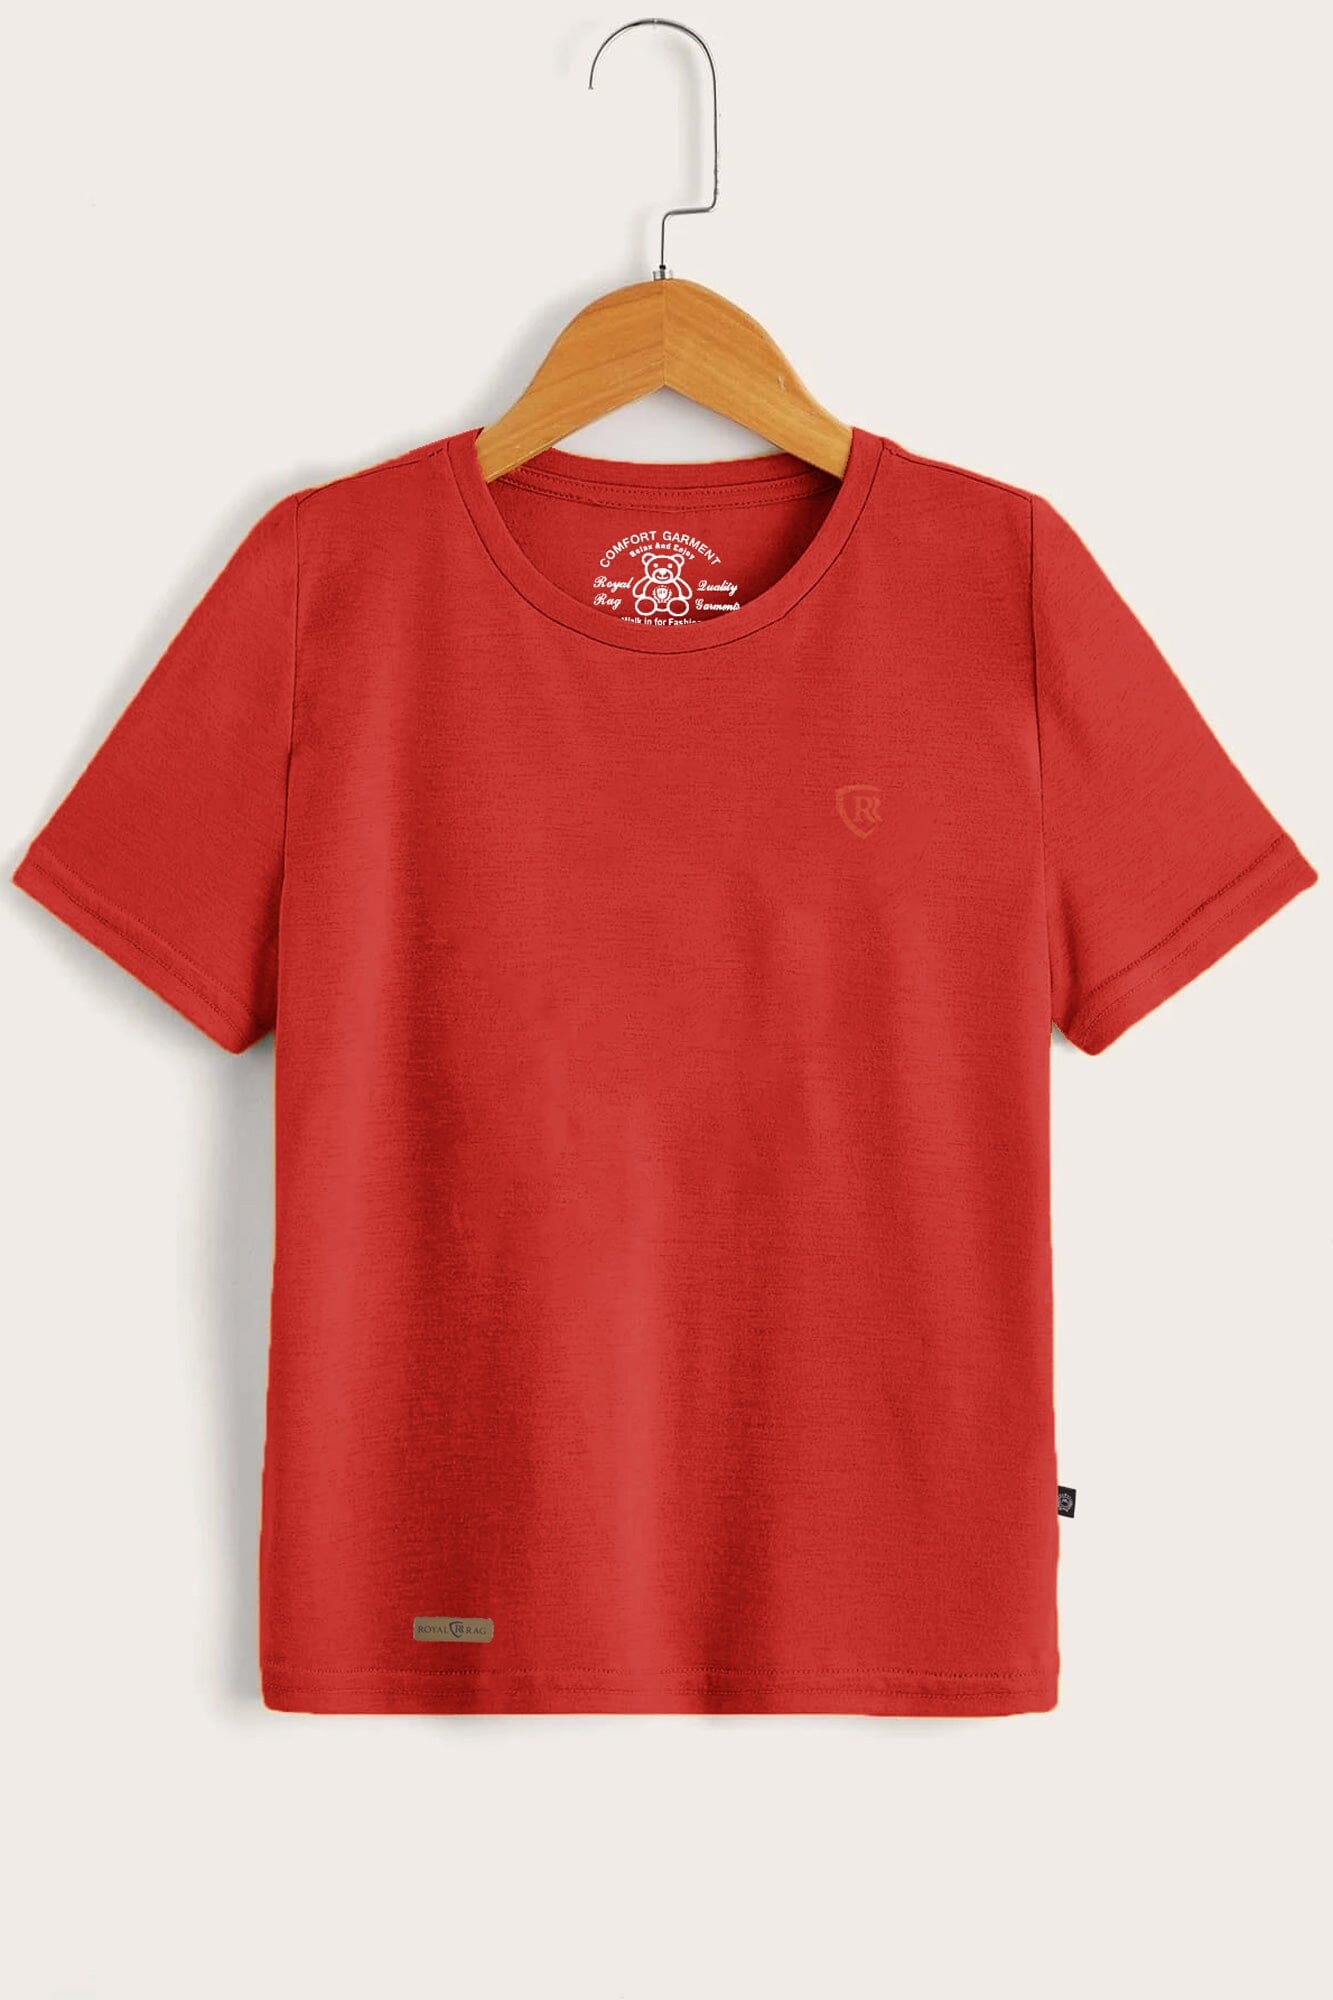 RR Kid's Logo Printed Short Sleeve Tee Shirt Boy's Tee Shirt Usman Traders Red 2-3 Years 